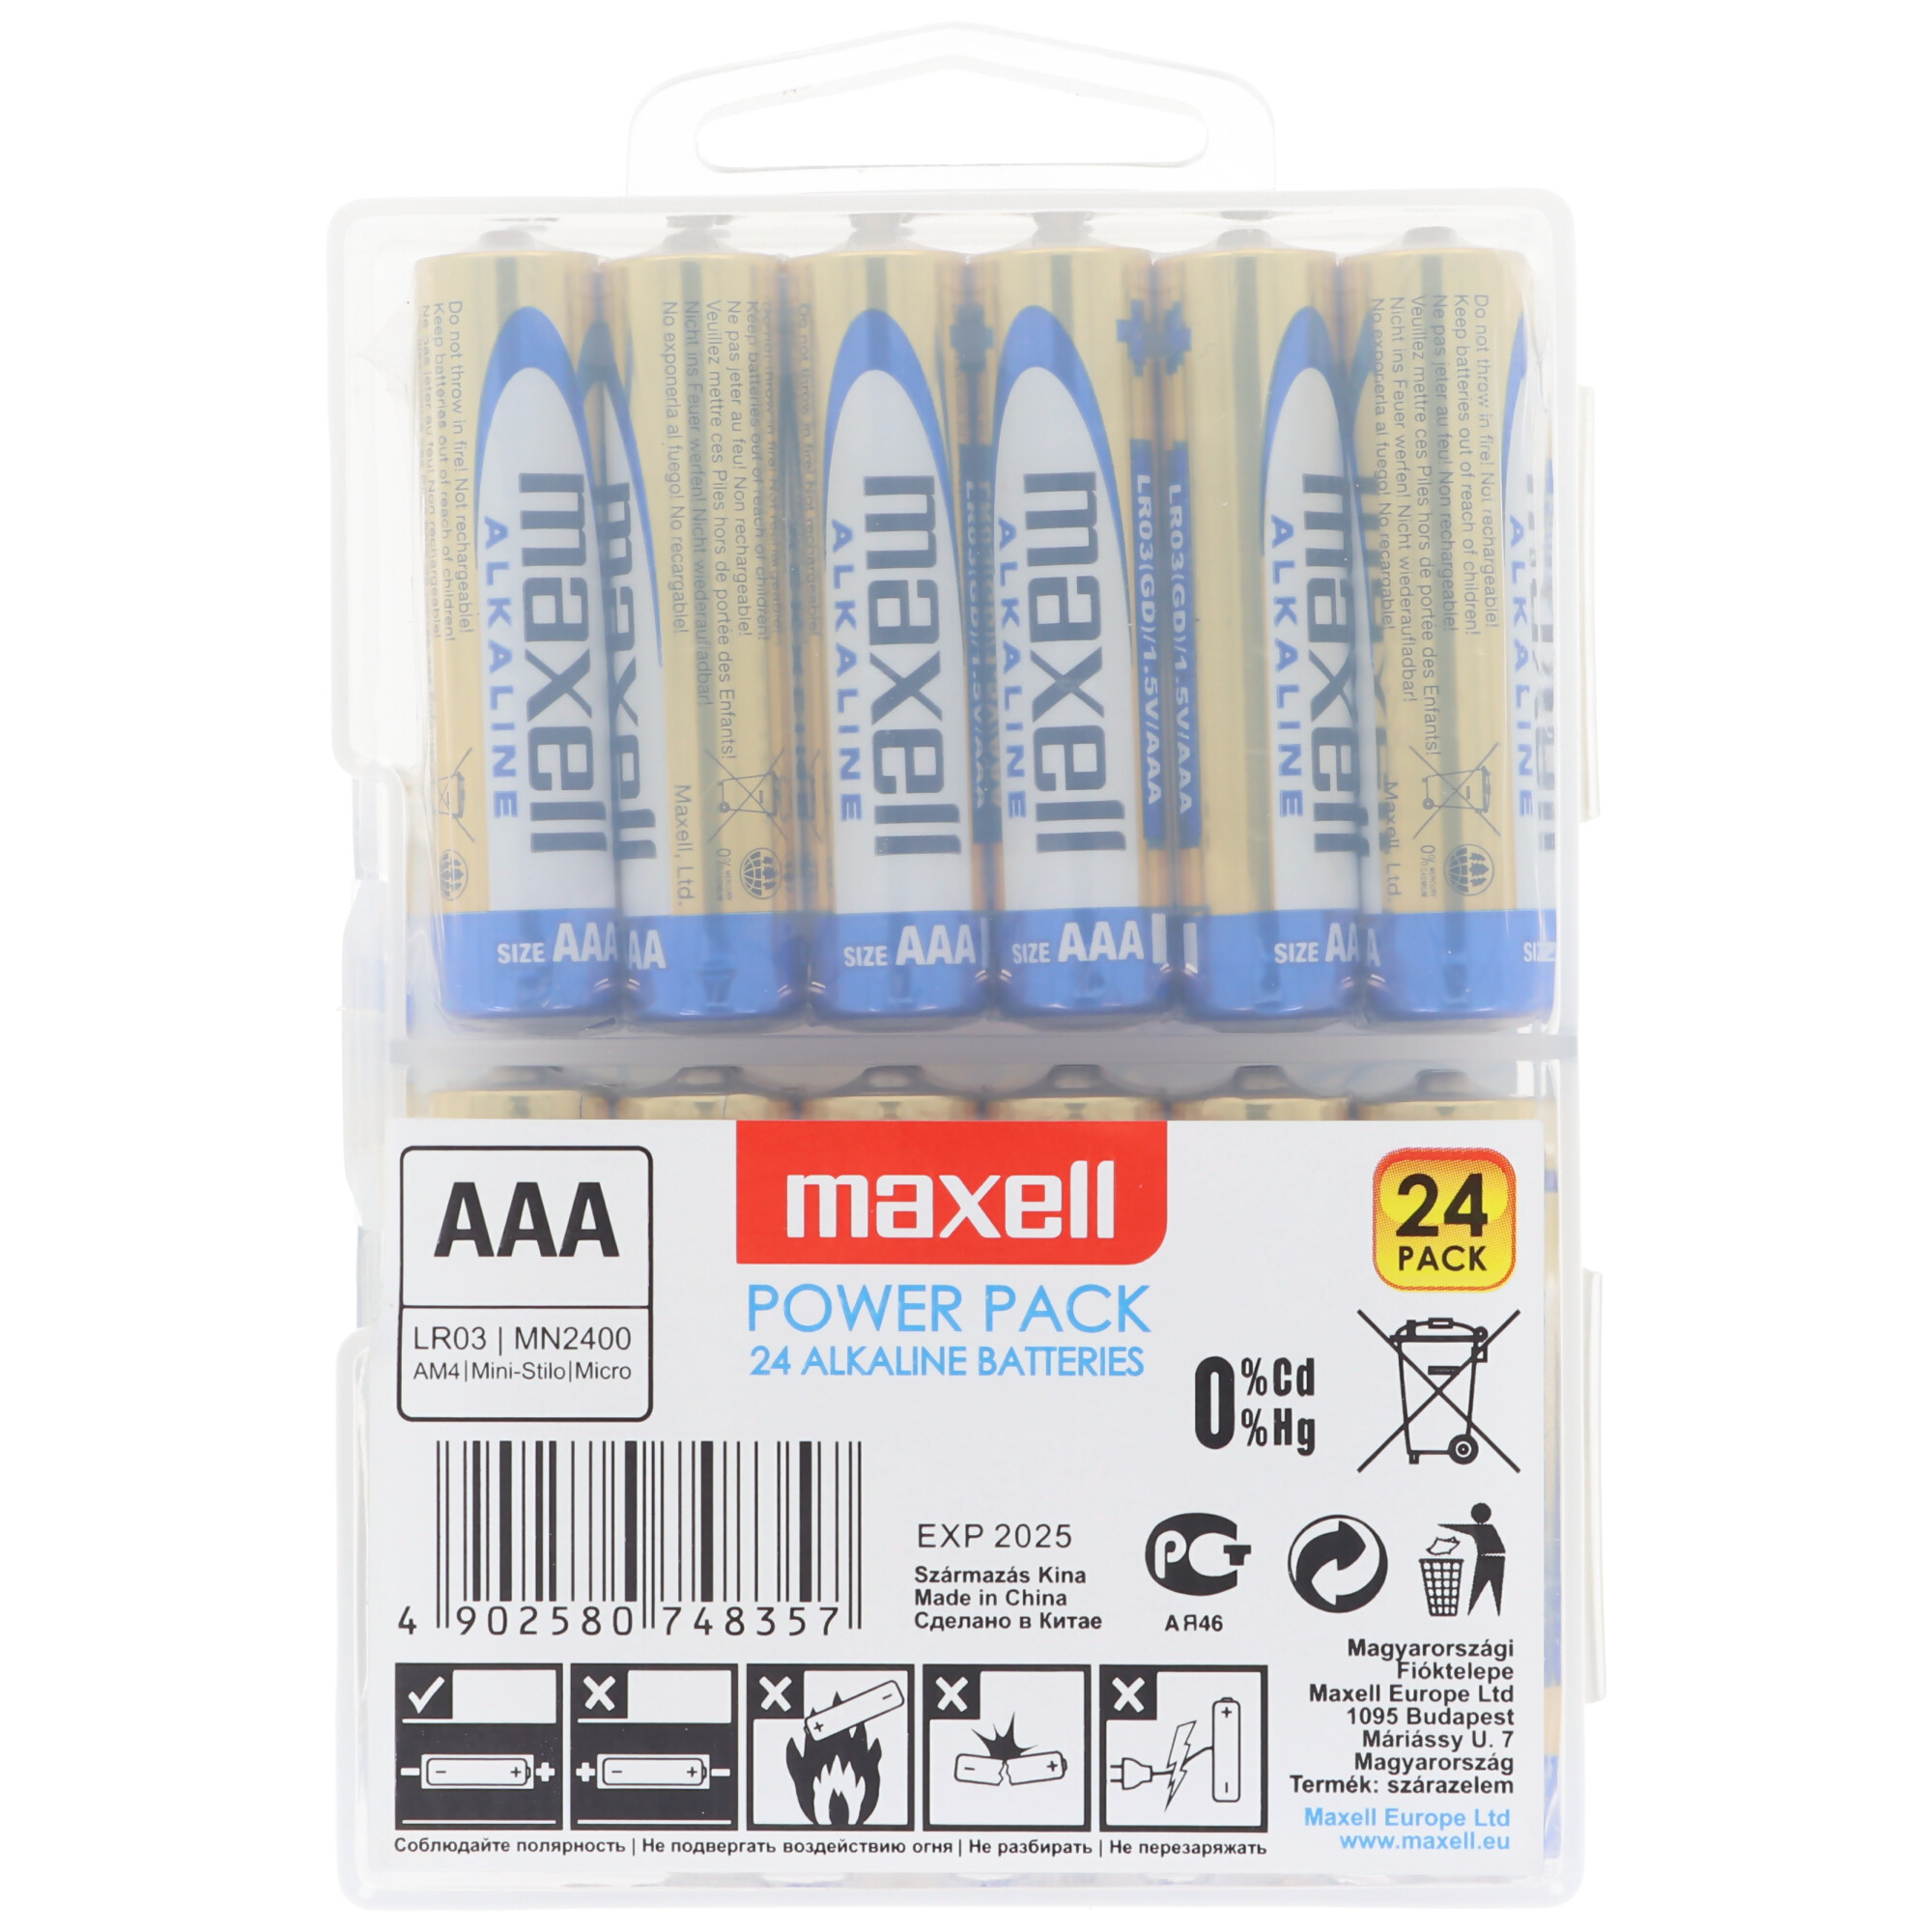 24er Marken Alkaline Batterie LR03 AAA im Sparpack Micro Batterien LR03 Batteriesparpack 1.5 Volt Batterie